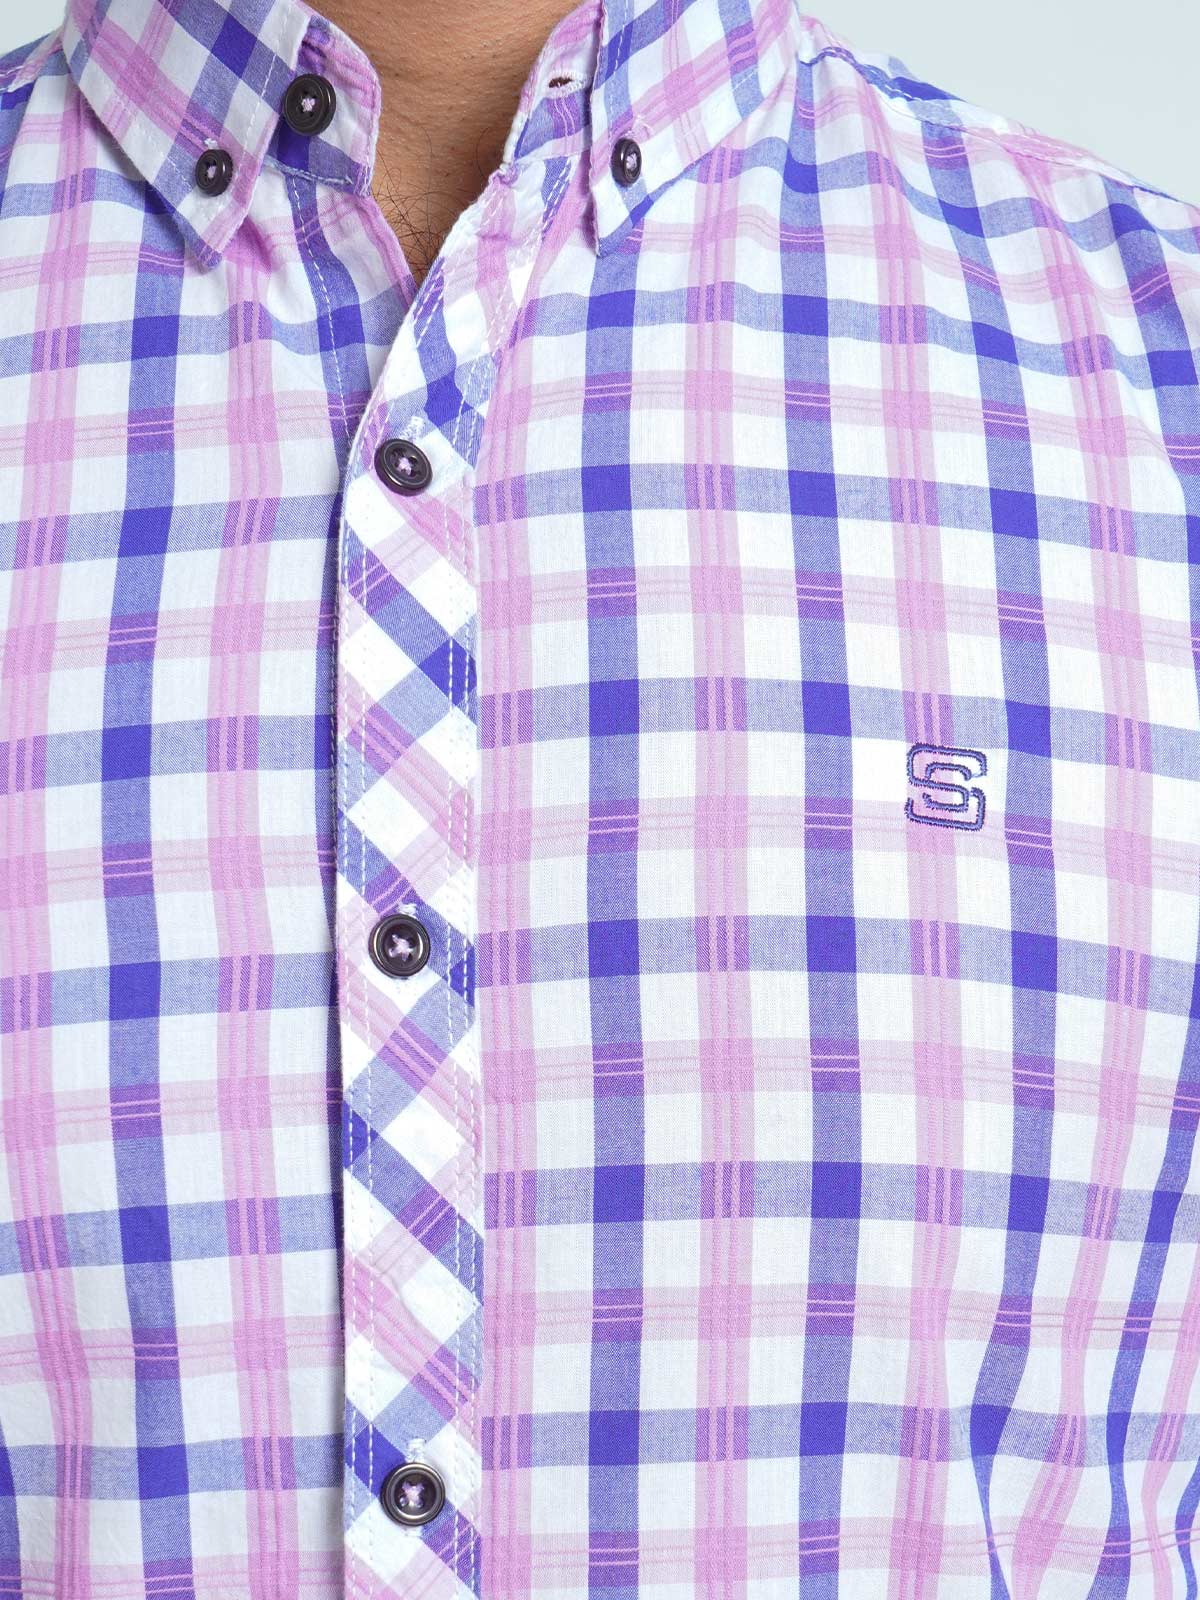 Blue & Purple Self Check Button Down Casual Shirt (CSC-059)